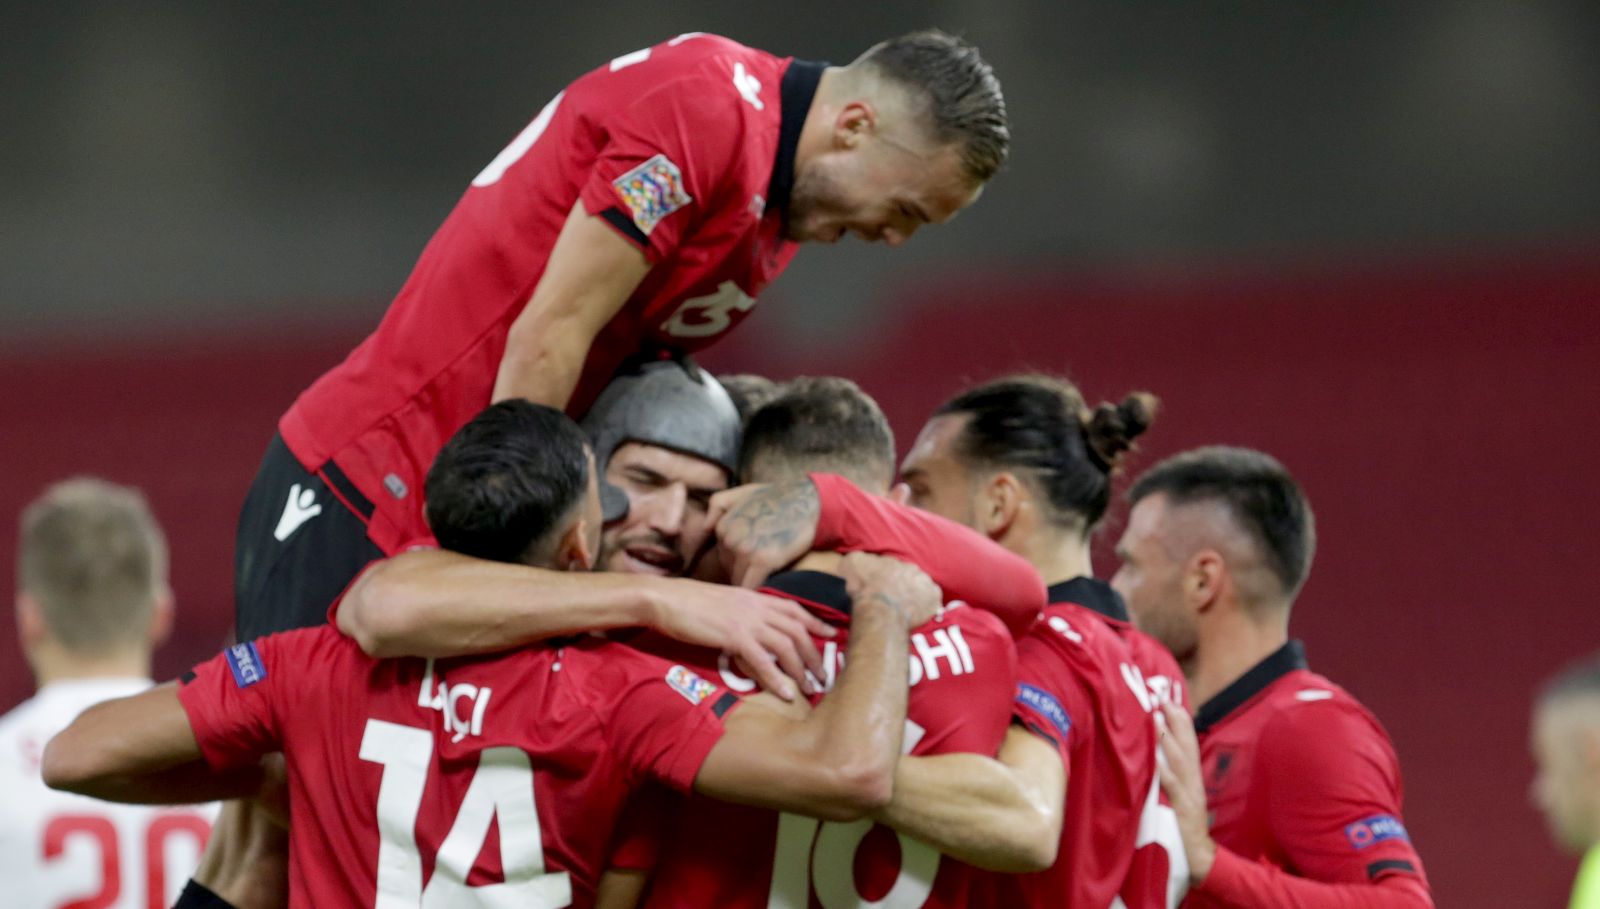 epa08827530 Albania players celebrate during the UEFA Nations League soccer match between Albania and Belarus in Tirana, Albania, 18 November 2020.  EPA/Malton Dibra